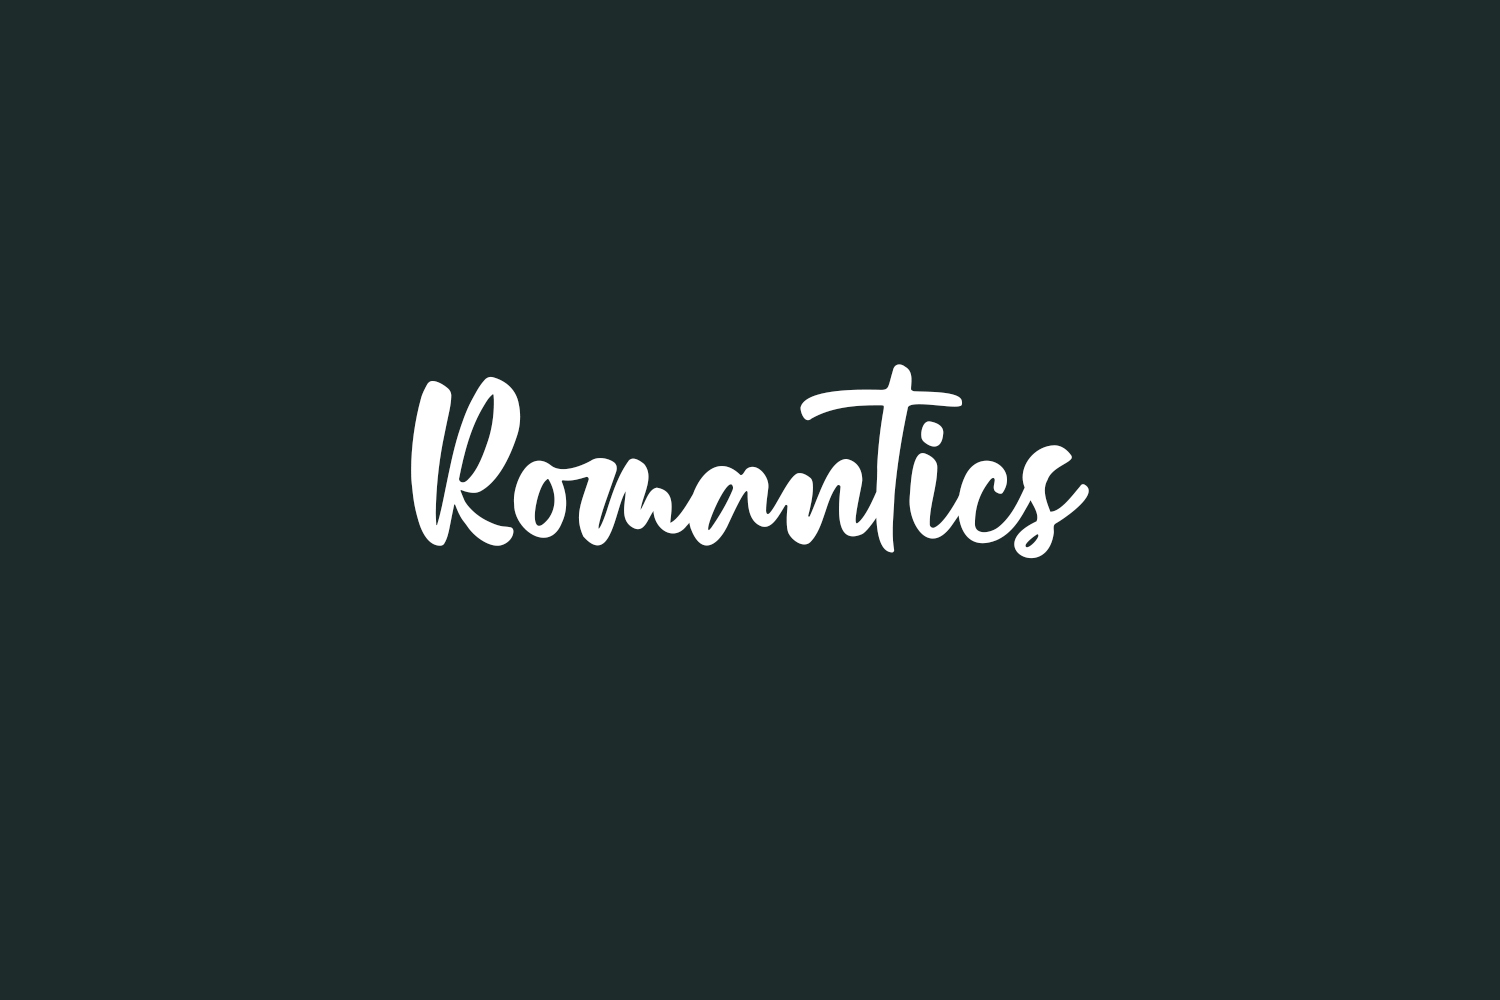 Romantics Free Font